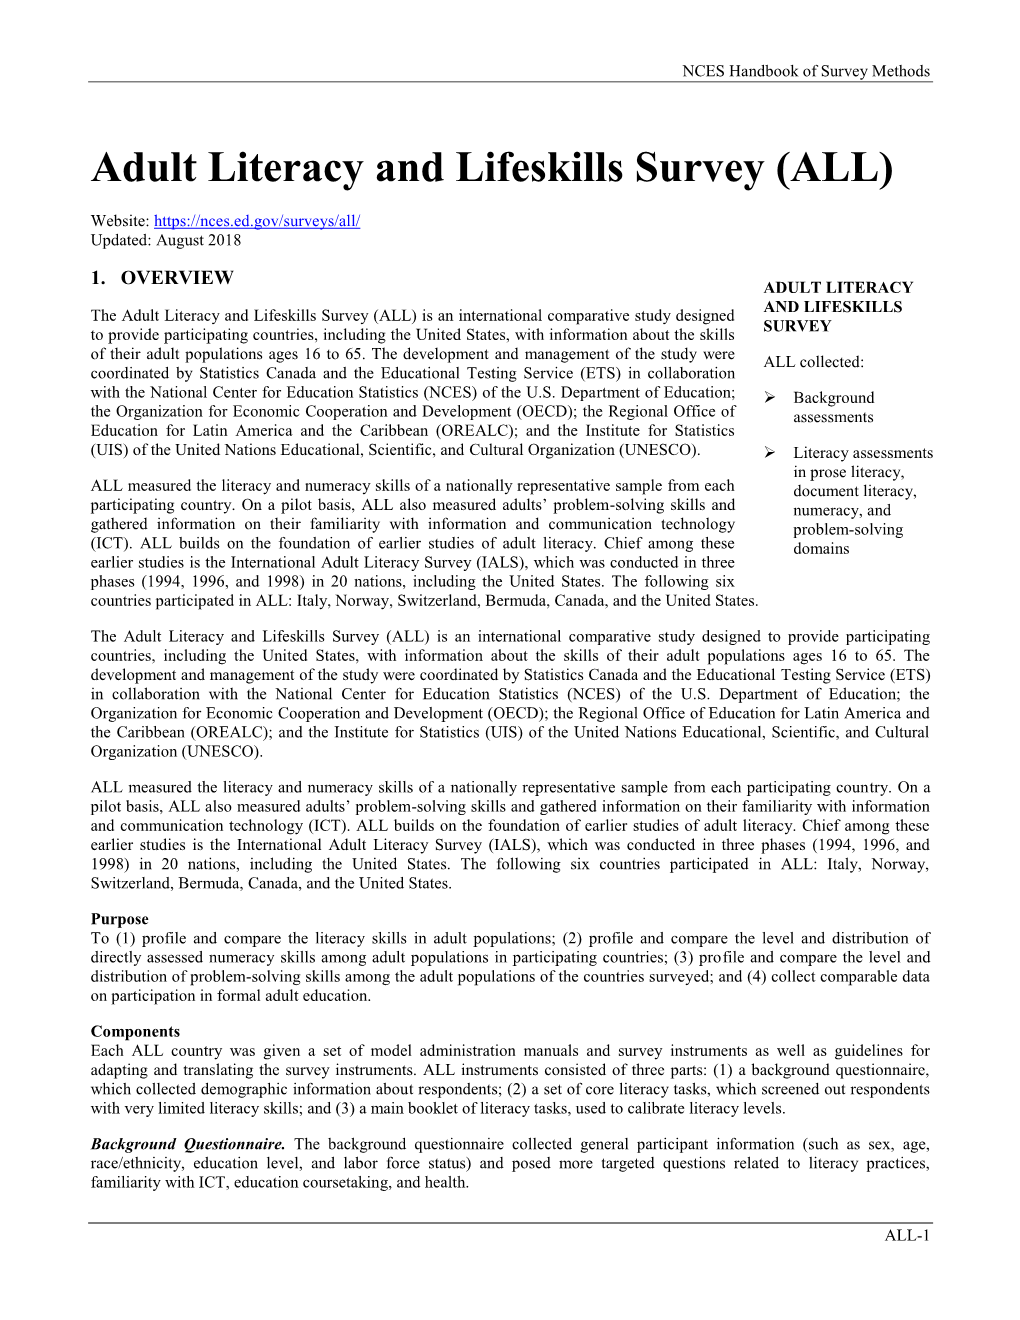 Adult Literacy and Lifeskills Survey (ALL)